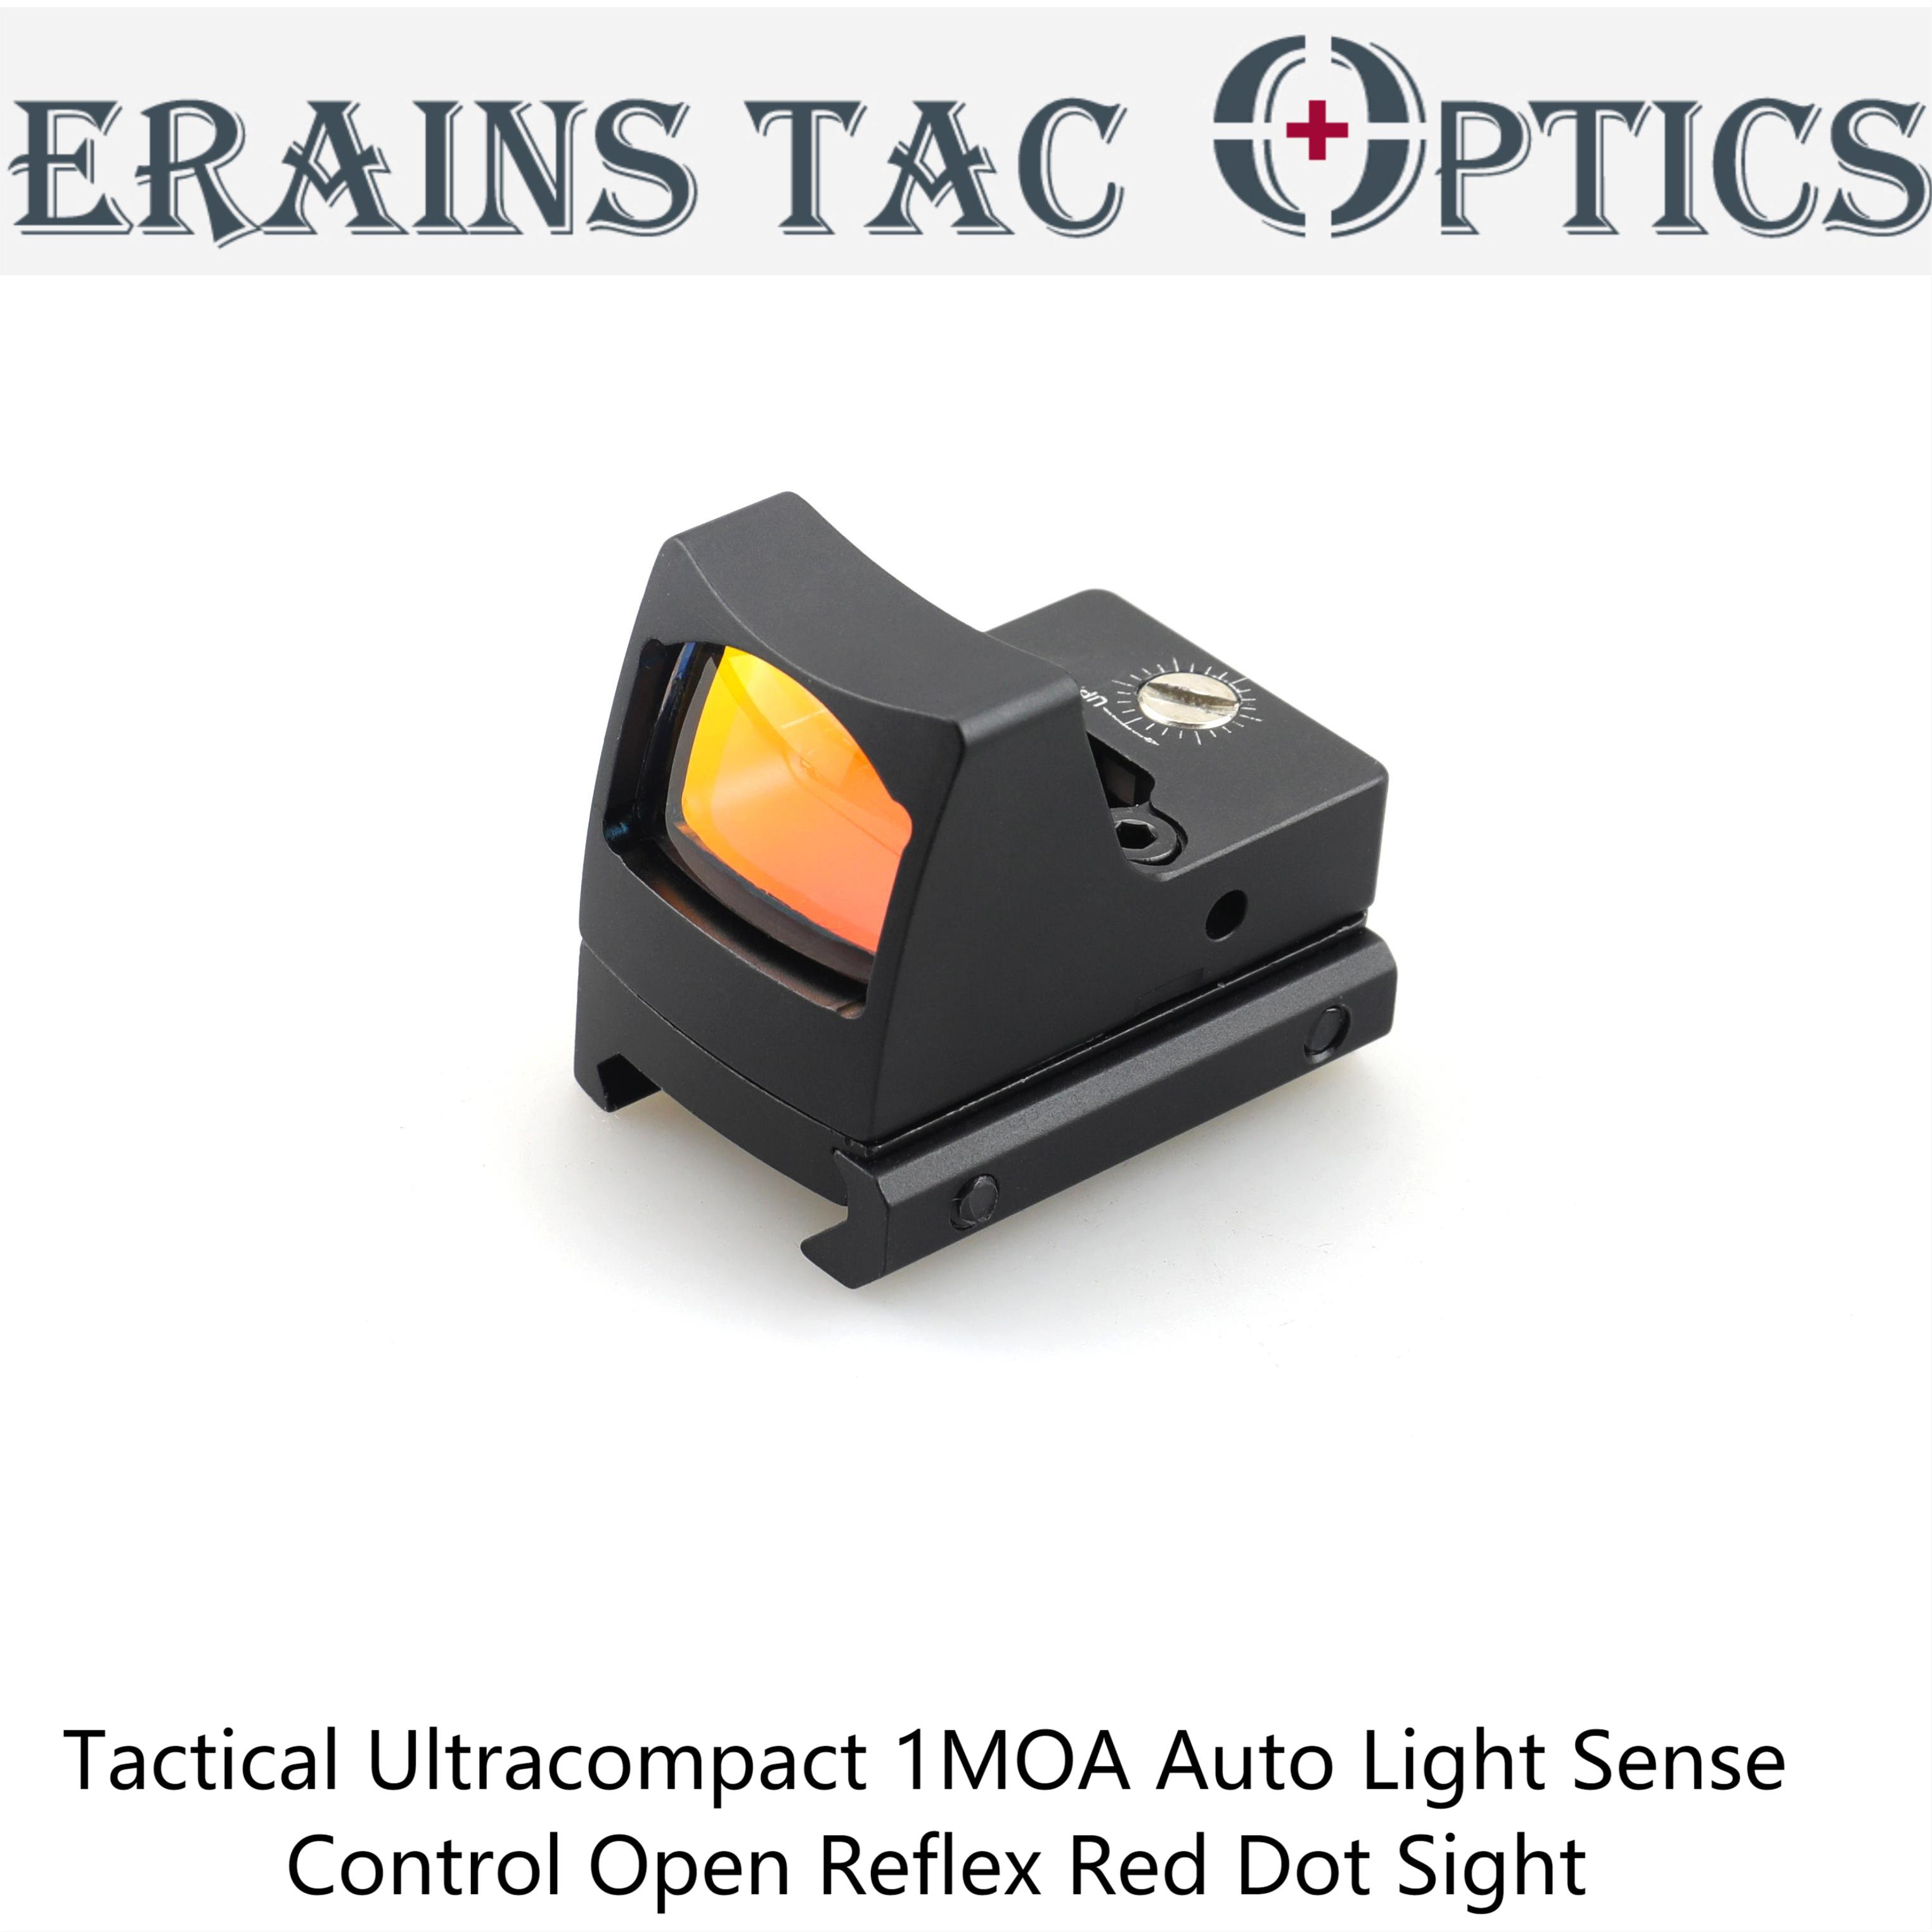 ES-RD-1580 The ultracompact tactical 1moa auto light sense control open reflex red dot sight